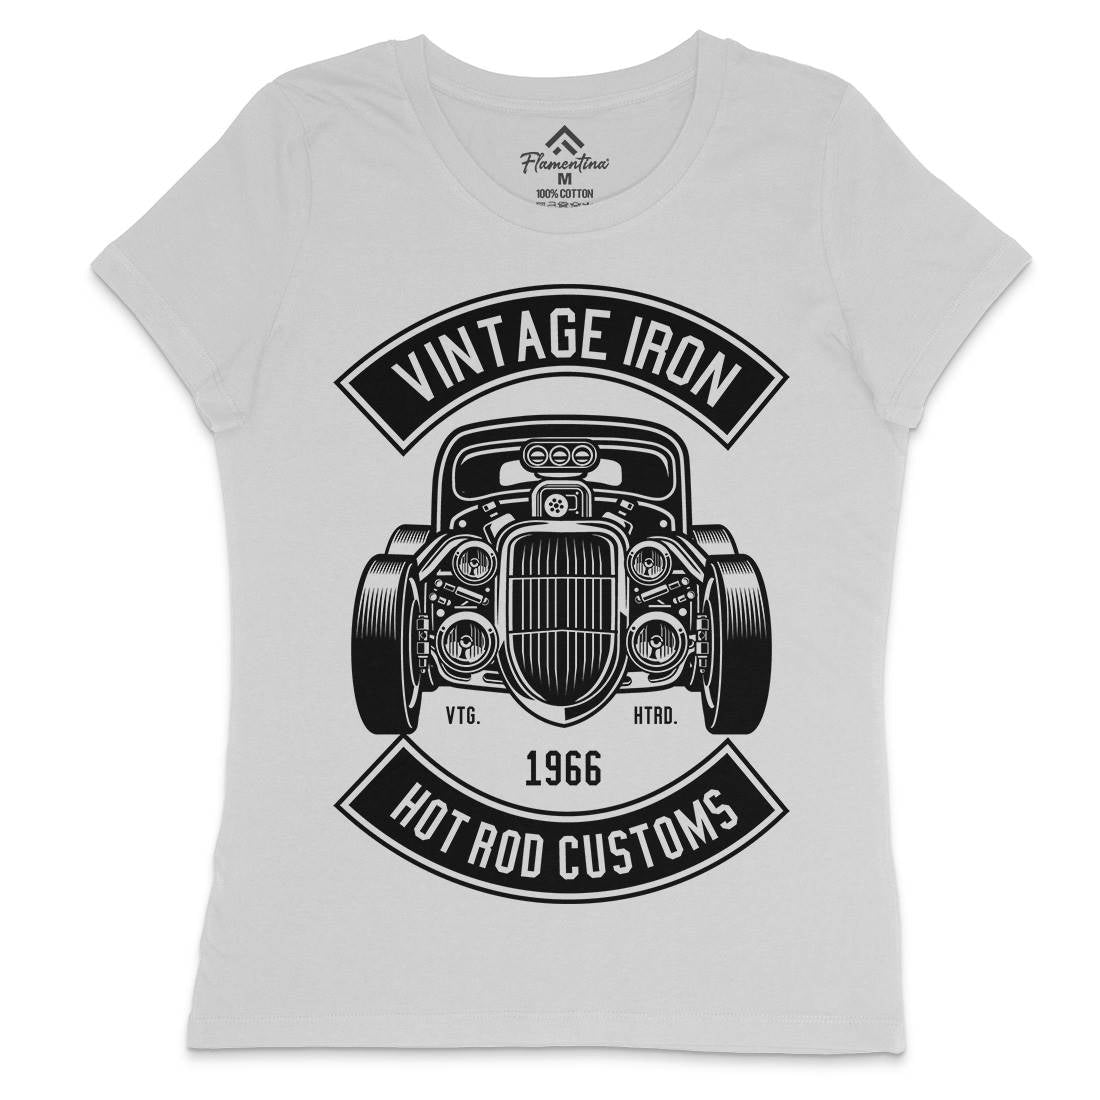 Vintage Iron Womens Crew Neck T-Shirt Cars B666